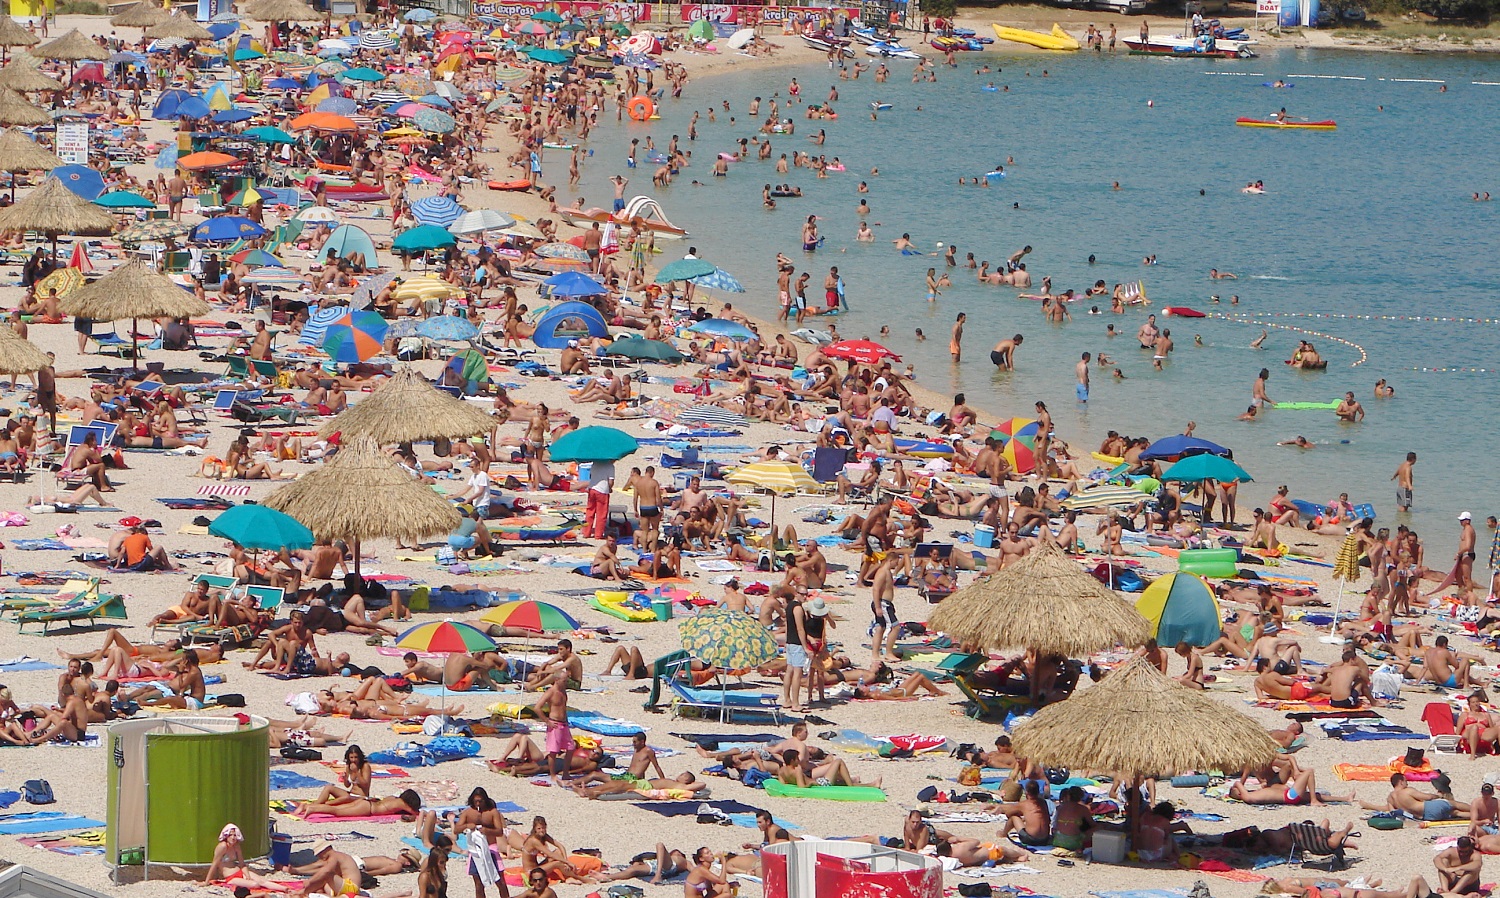 crowded-beach-during-tourist-season